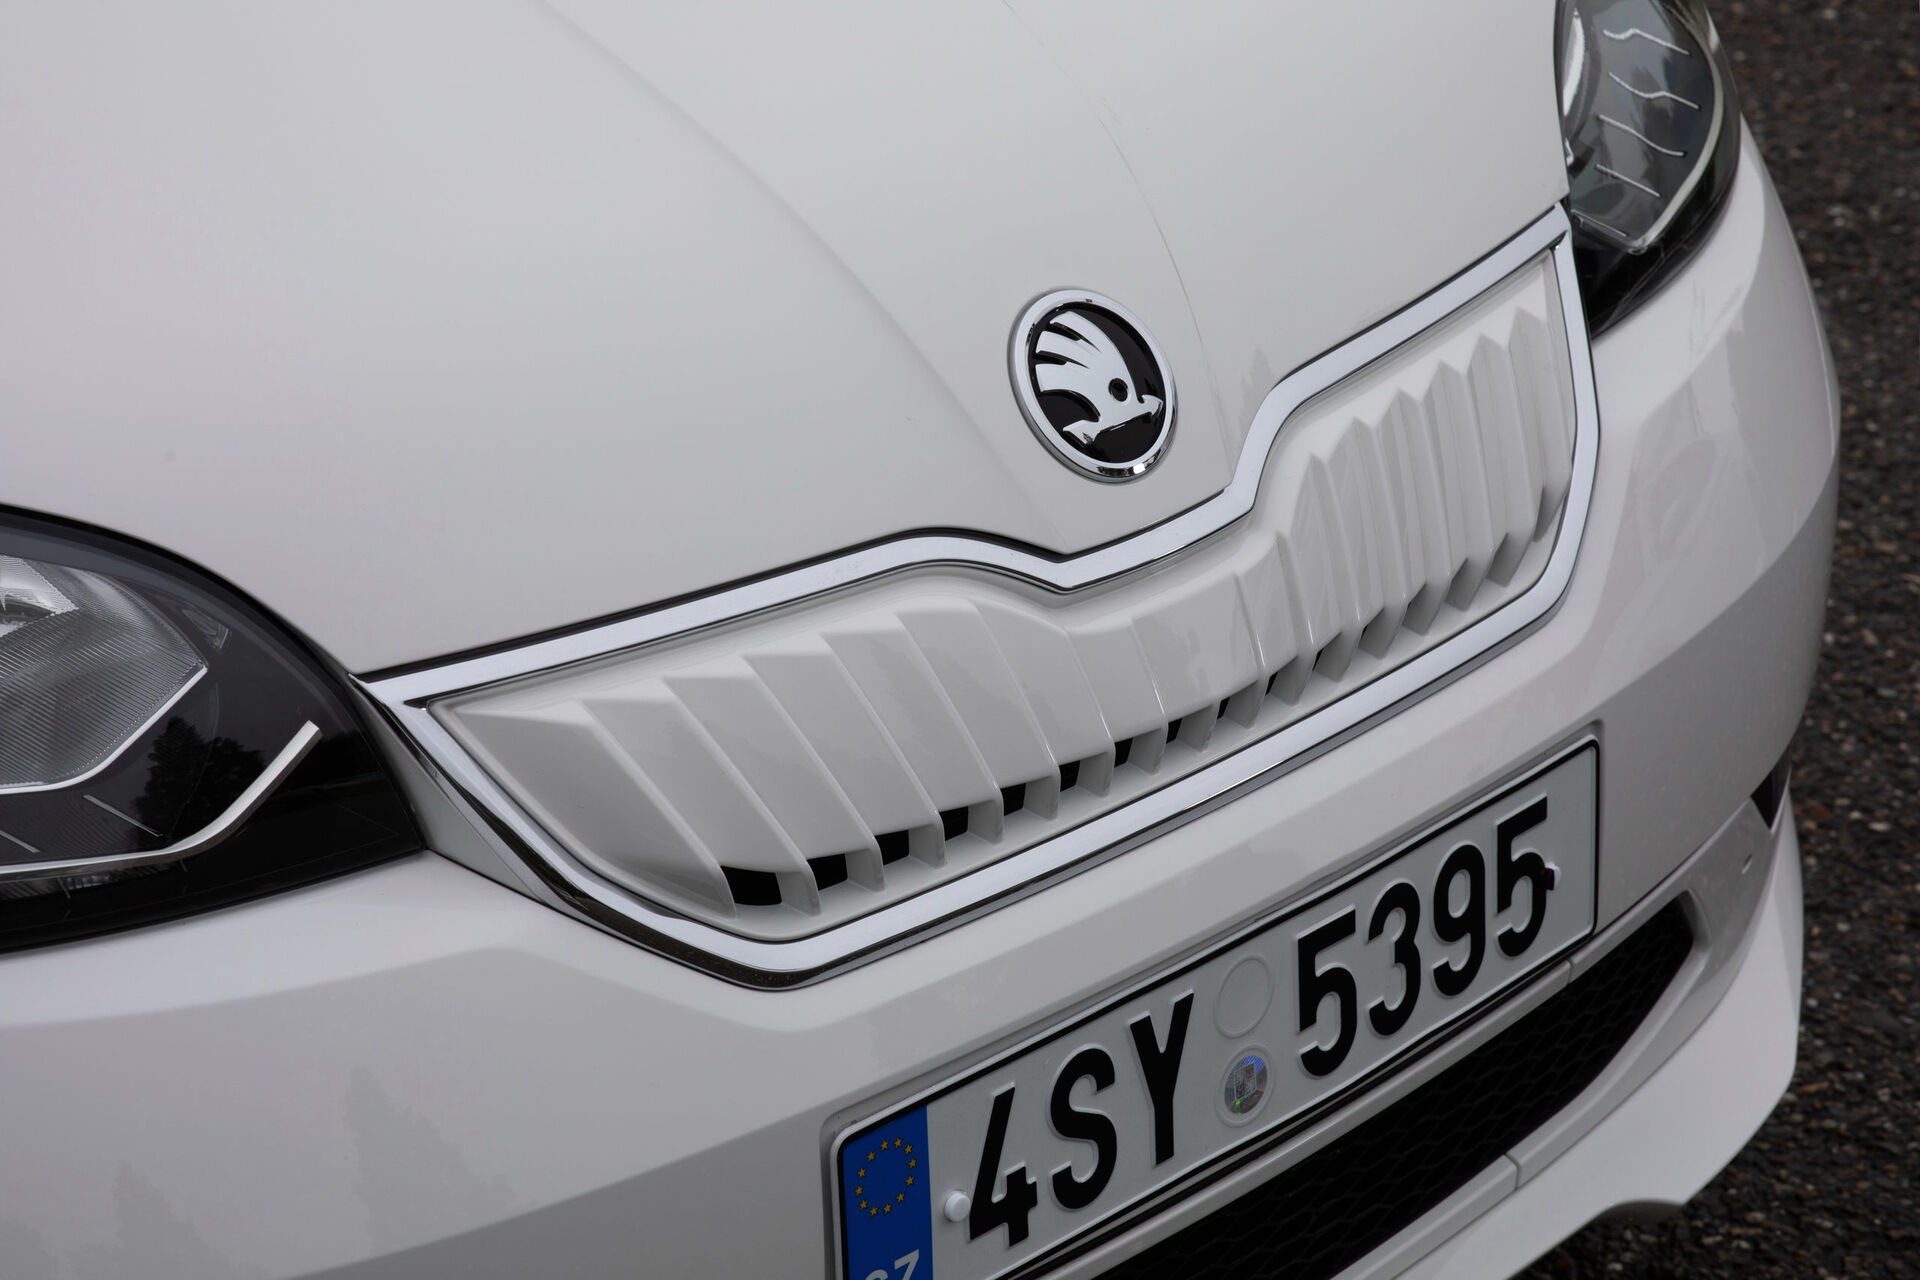 Škoda Citigo iV (2019)